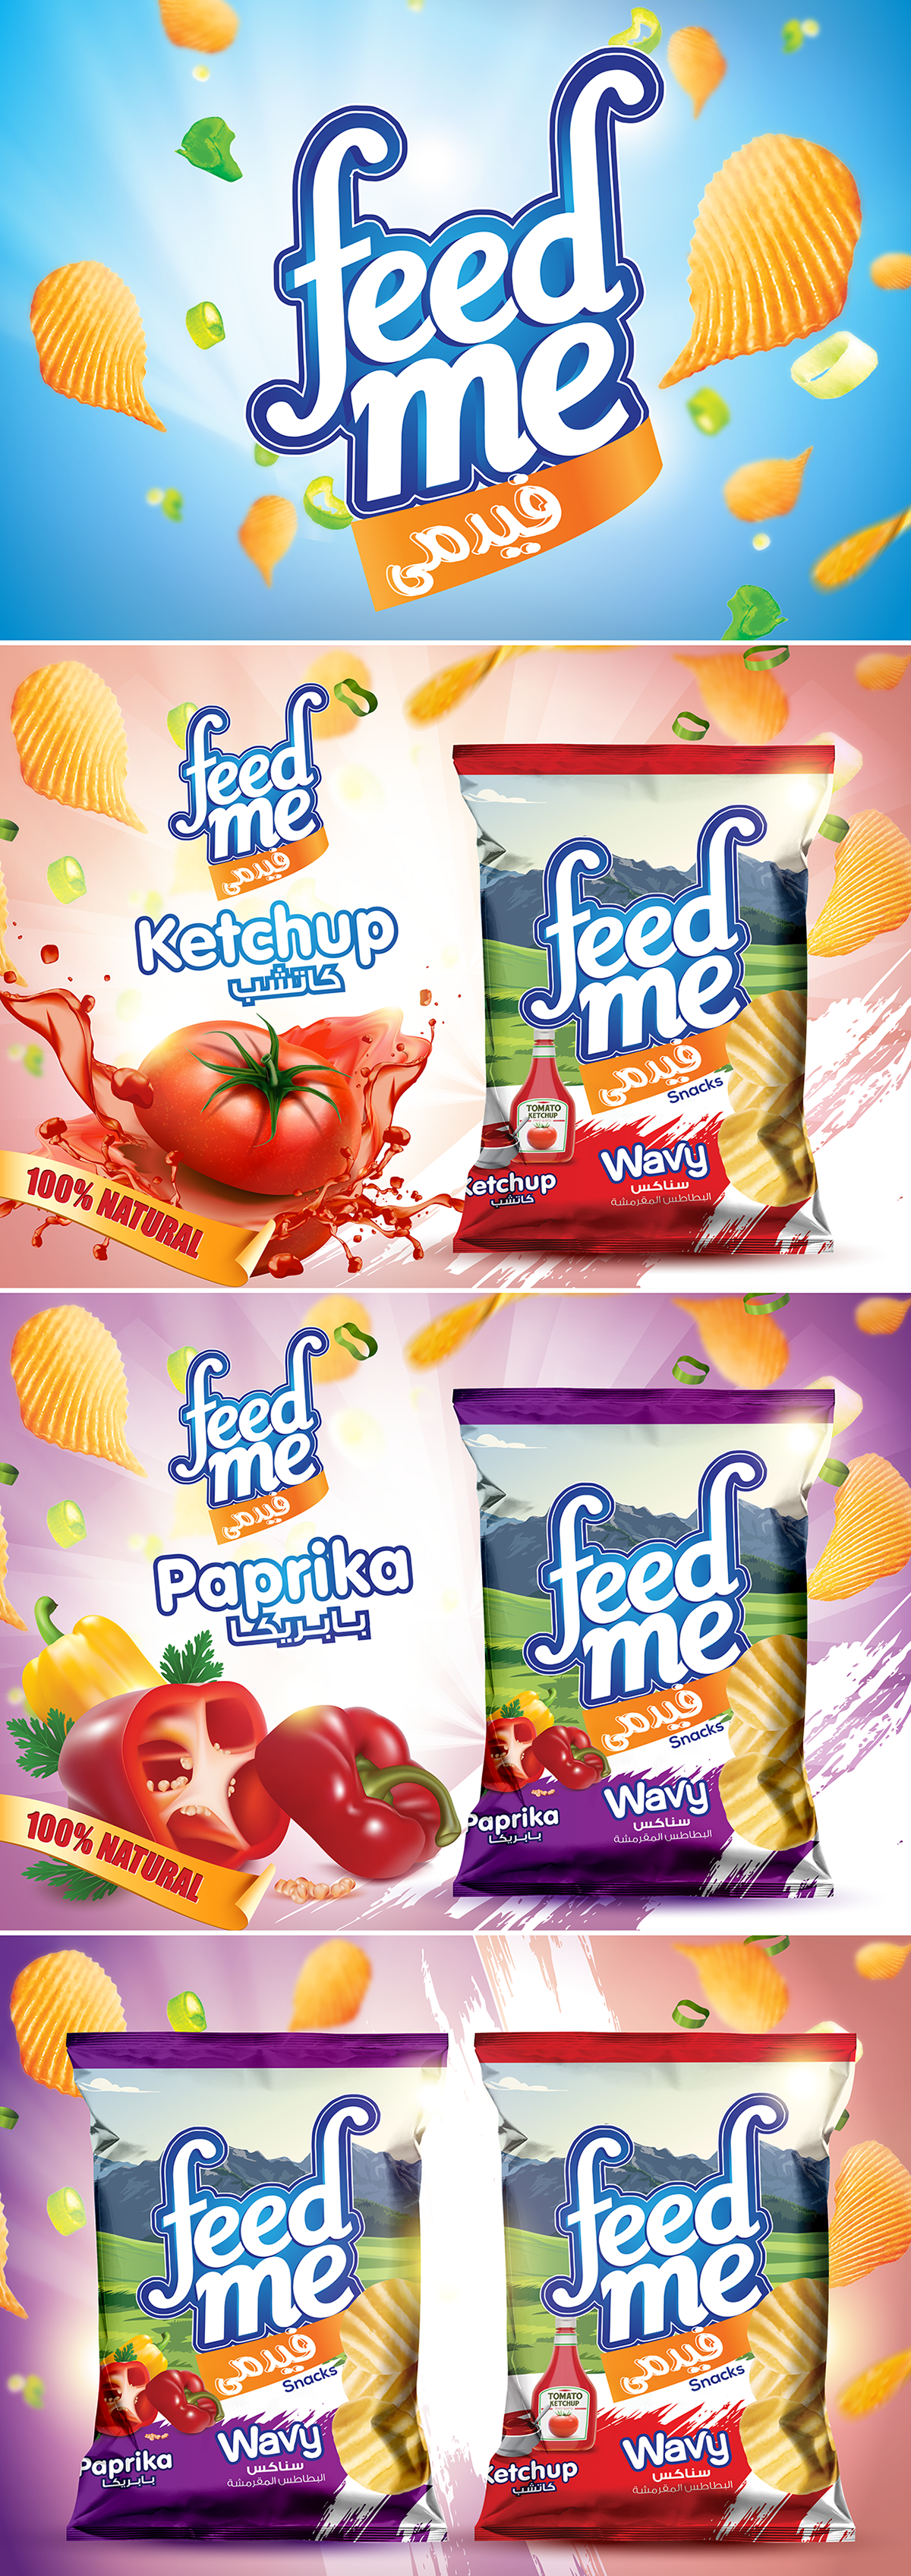 chips wavy Paprika ketchup branding  product